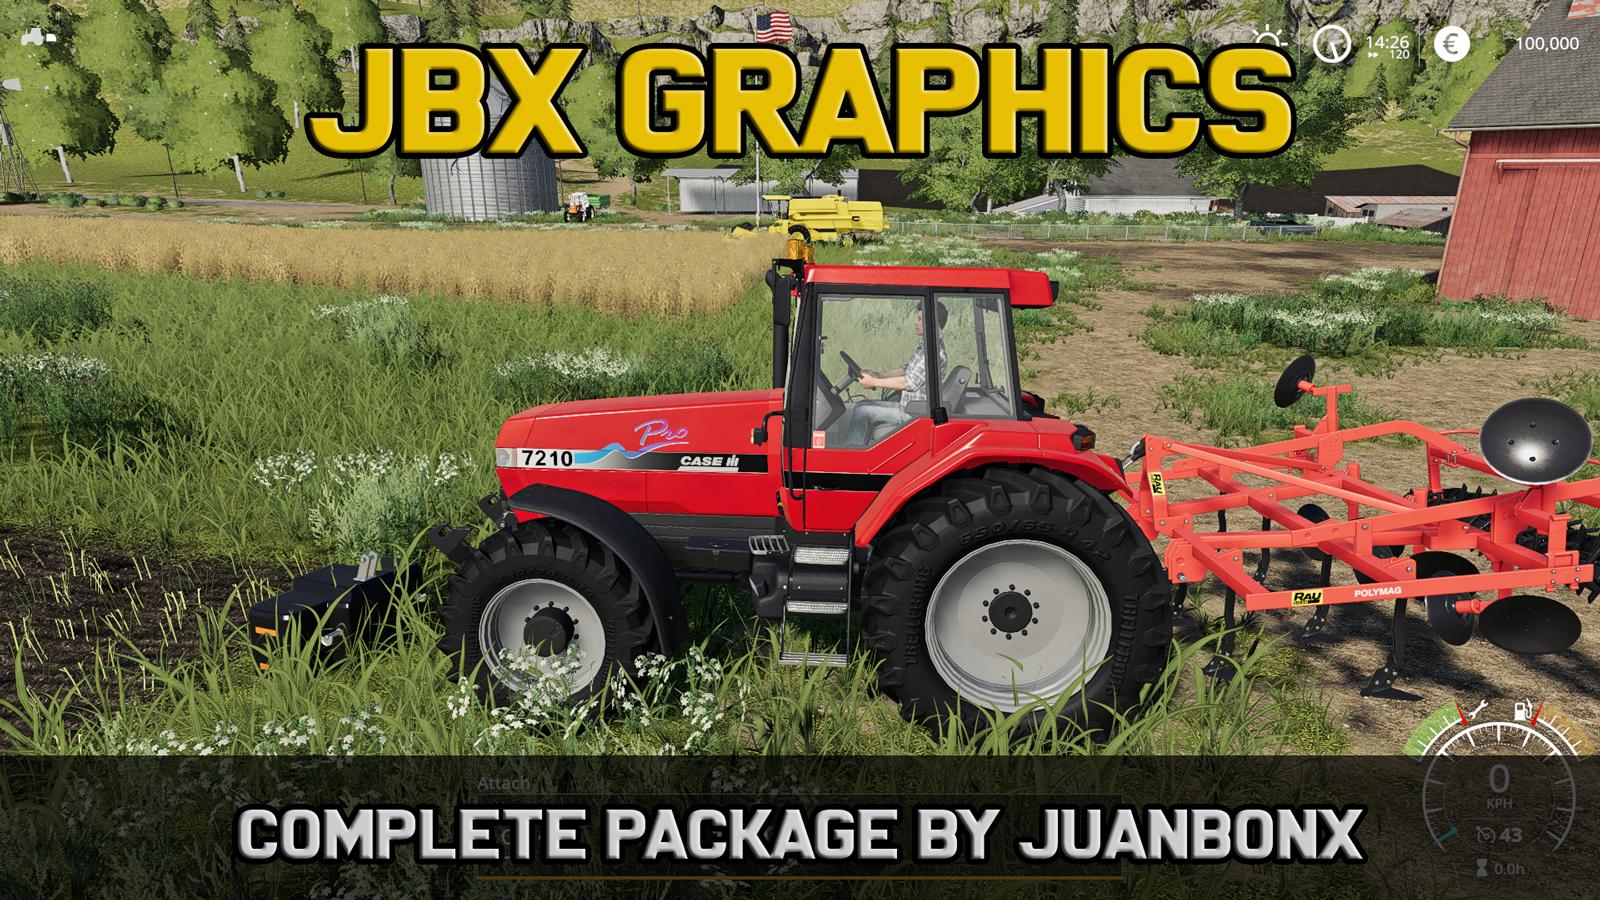 familie Aggressiv skam JBX Graphics - Complete Package (10-1-2019) - FS19 mod - FS19.net